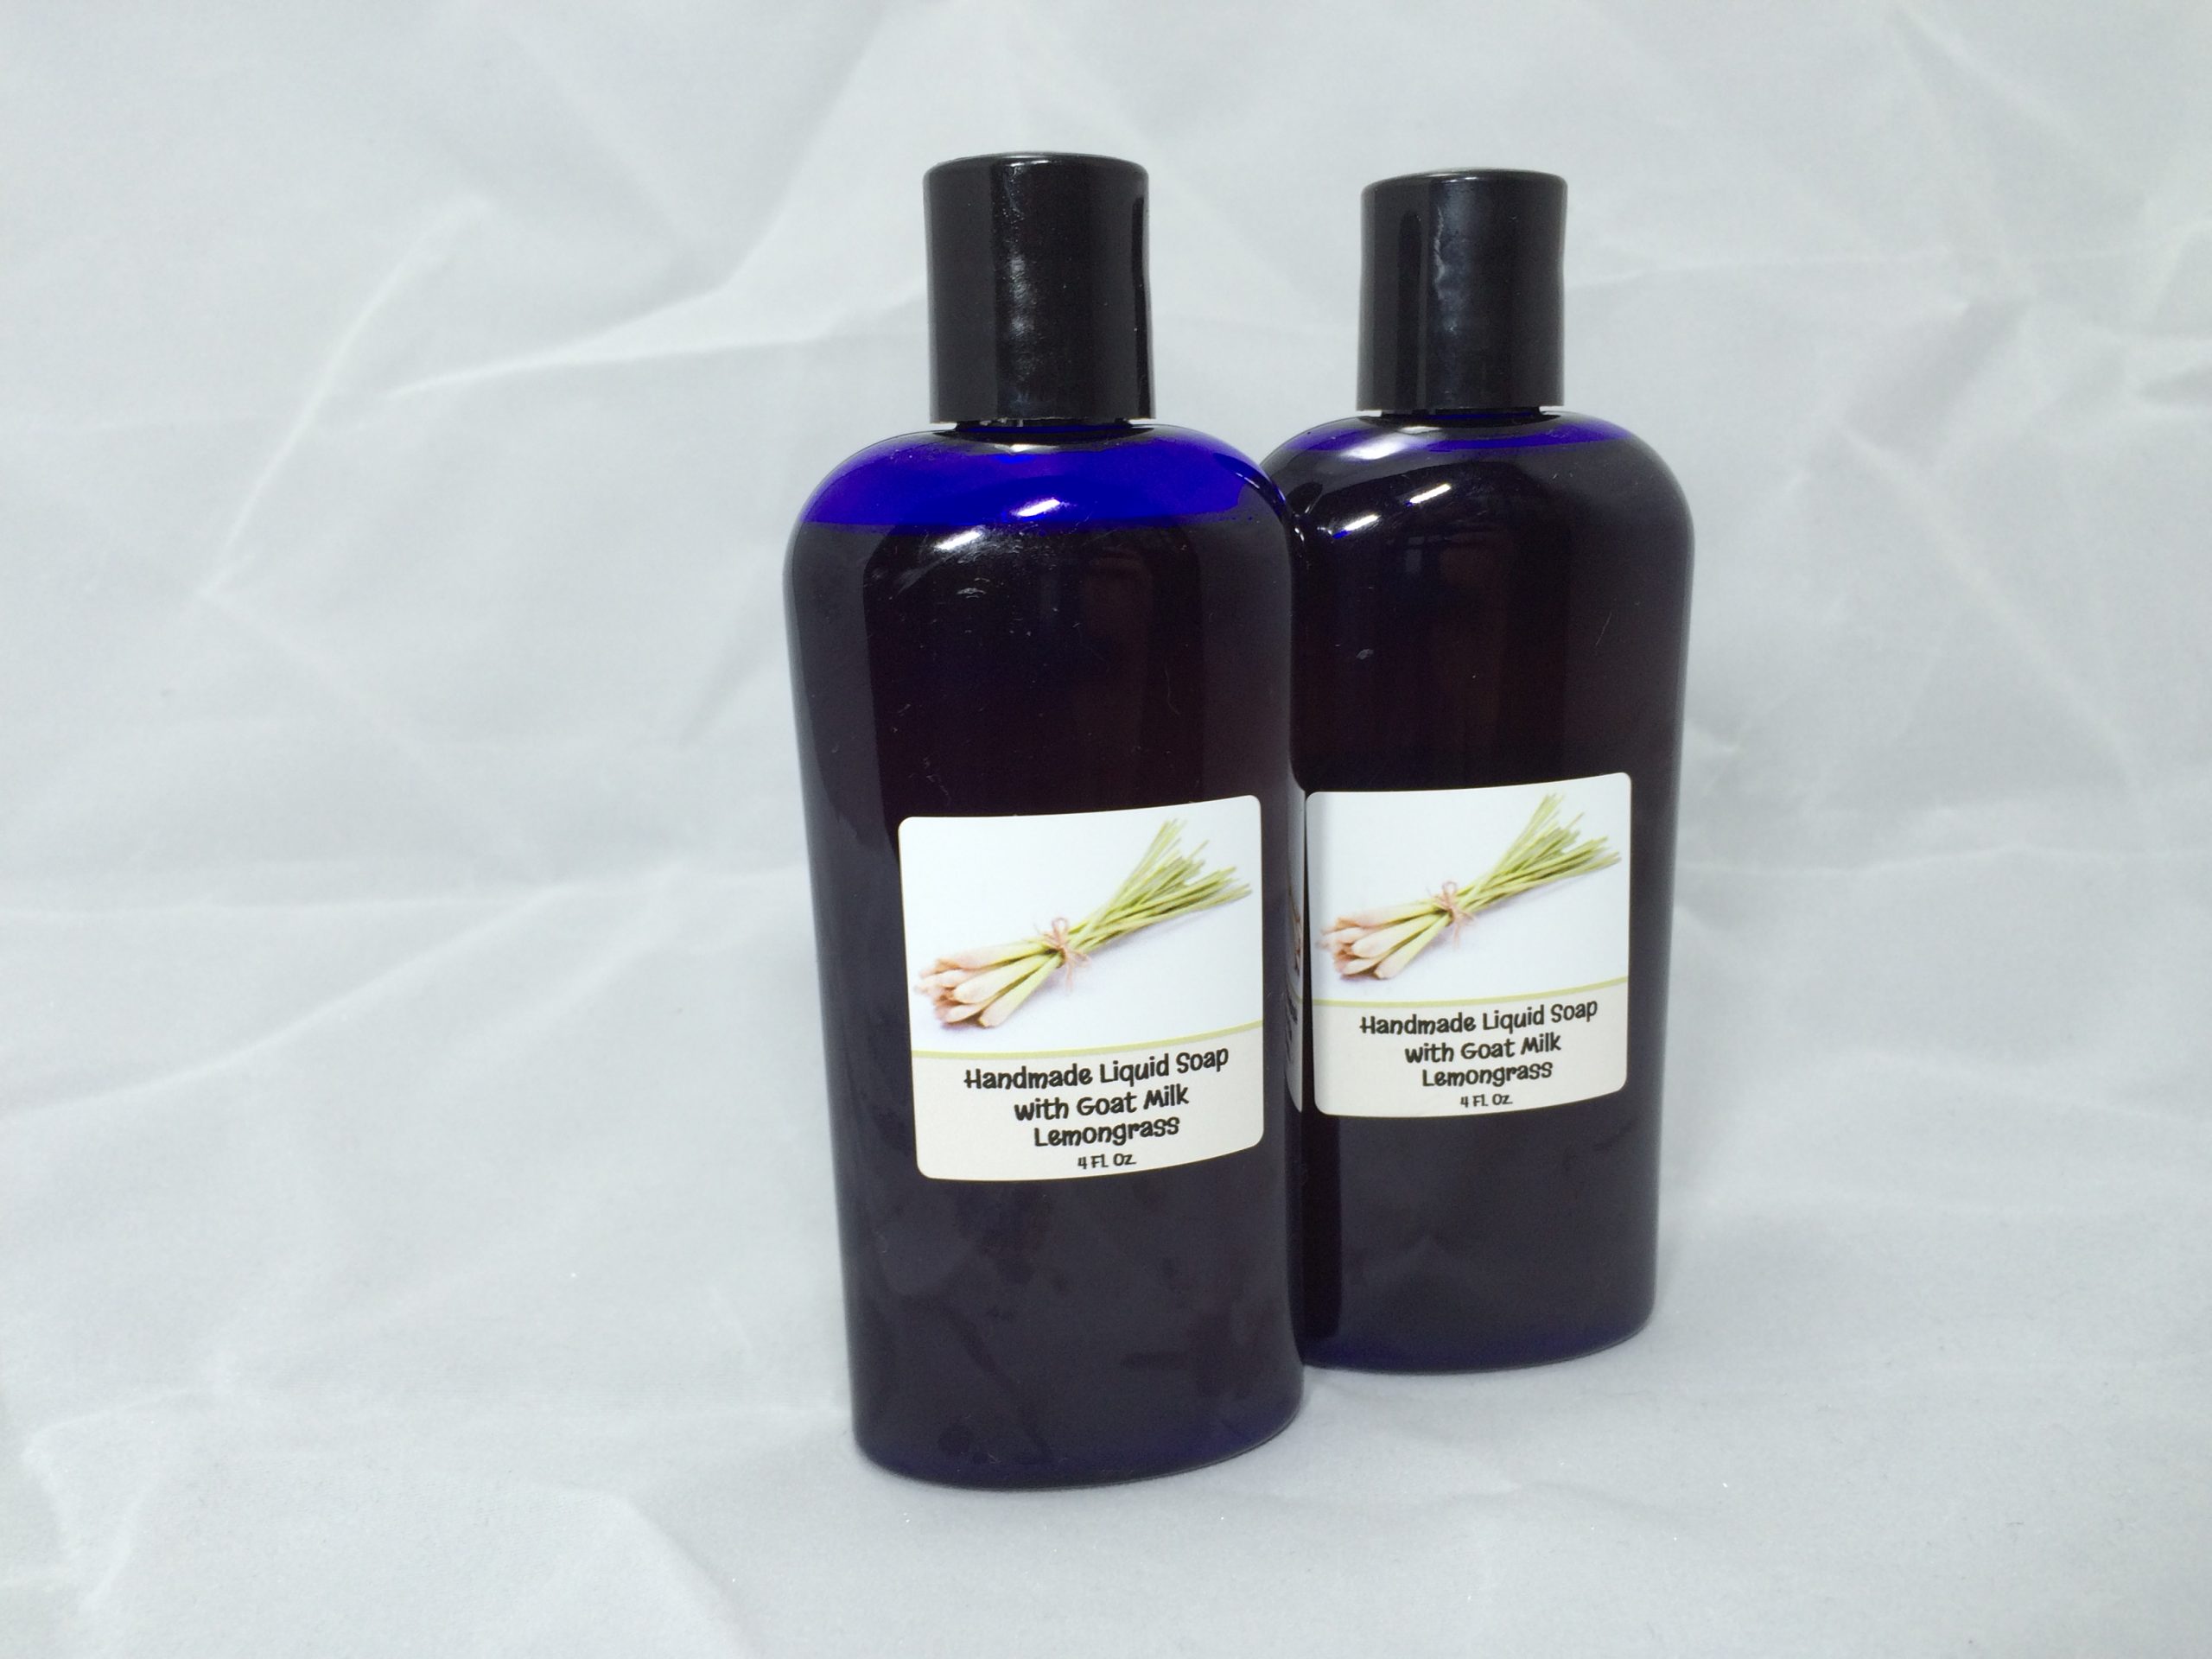 Handmade liquid soap with goat milk lemongrass scented